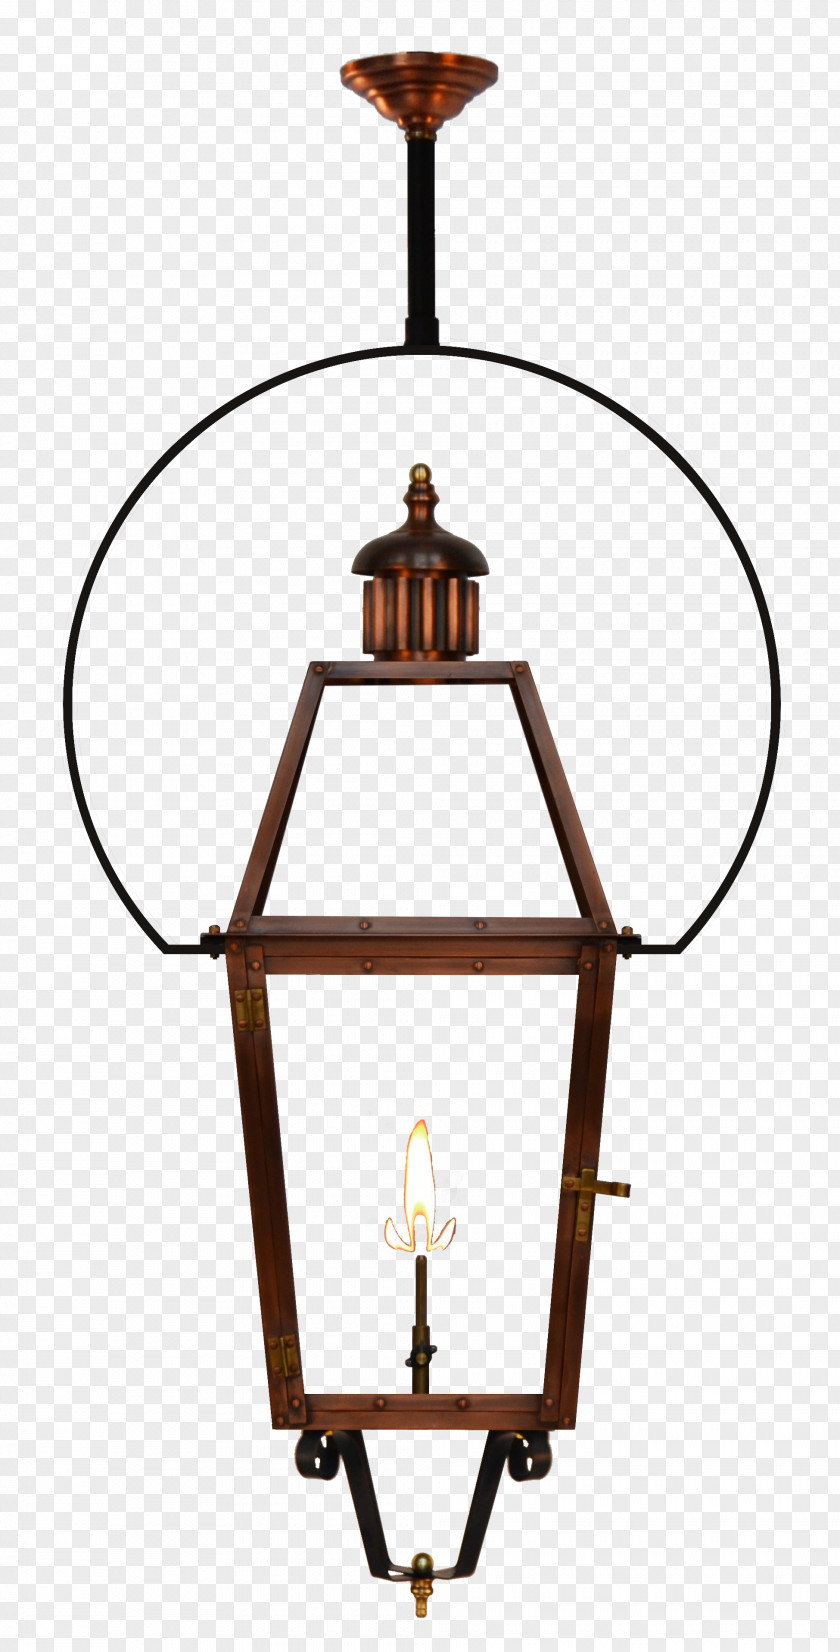 Light Gas Lighting Lantern Sconce PNG